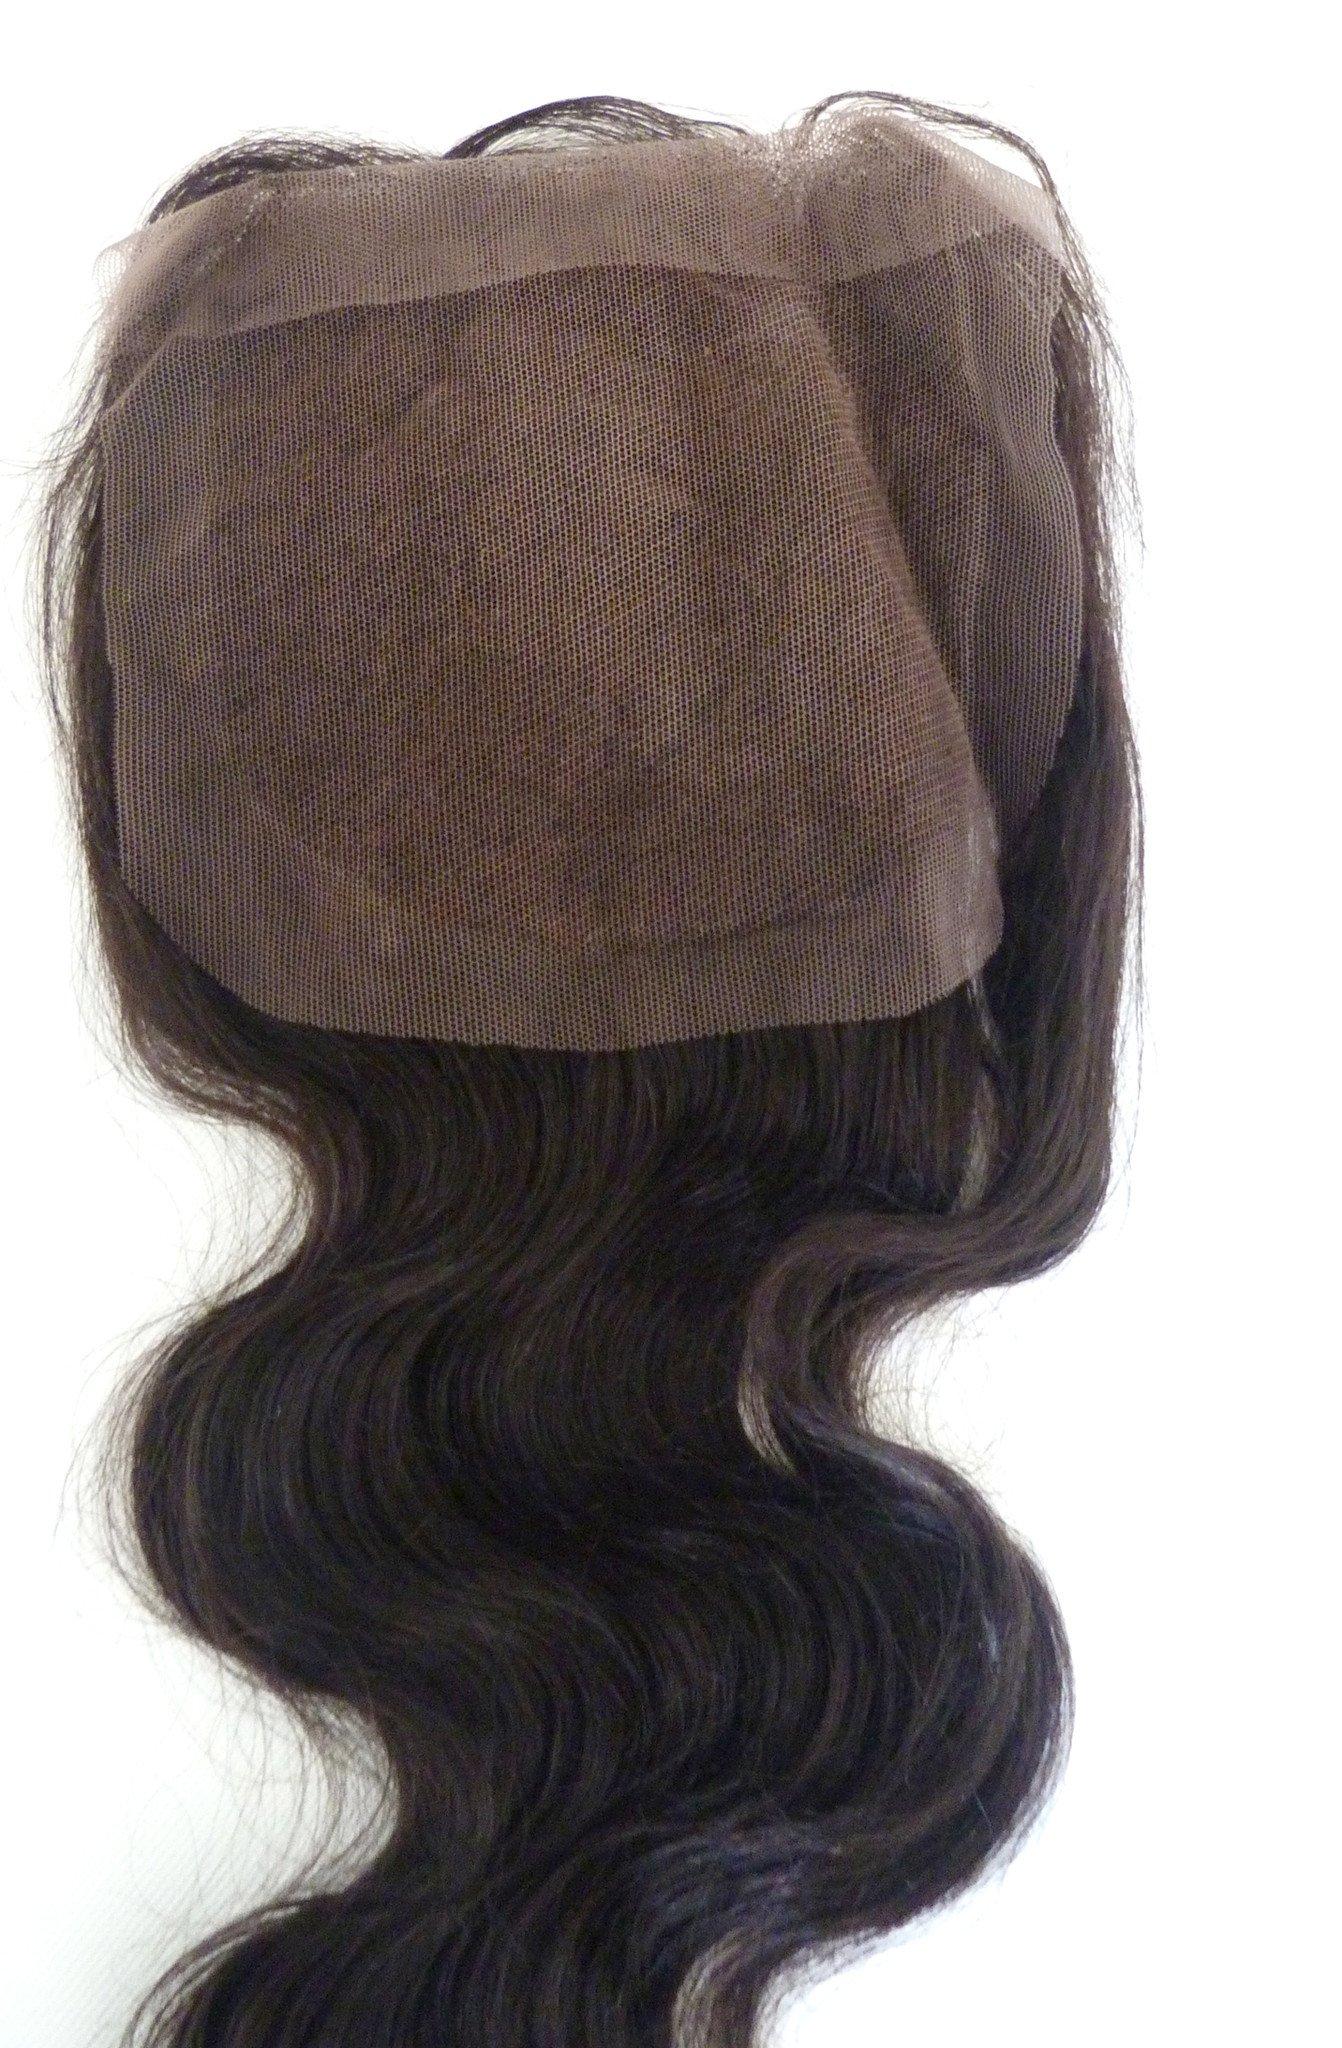 Indischer Virgin-Remy-Spitzenverschluss – 4 x 4 Zoll – Virgin Hair & Beauty, die besten Haarverlängerungen, echtes Virgin-Menschenhaar.